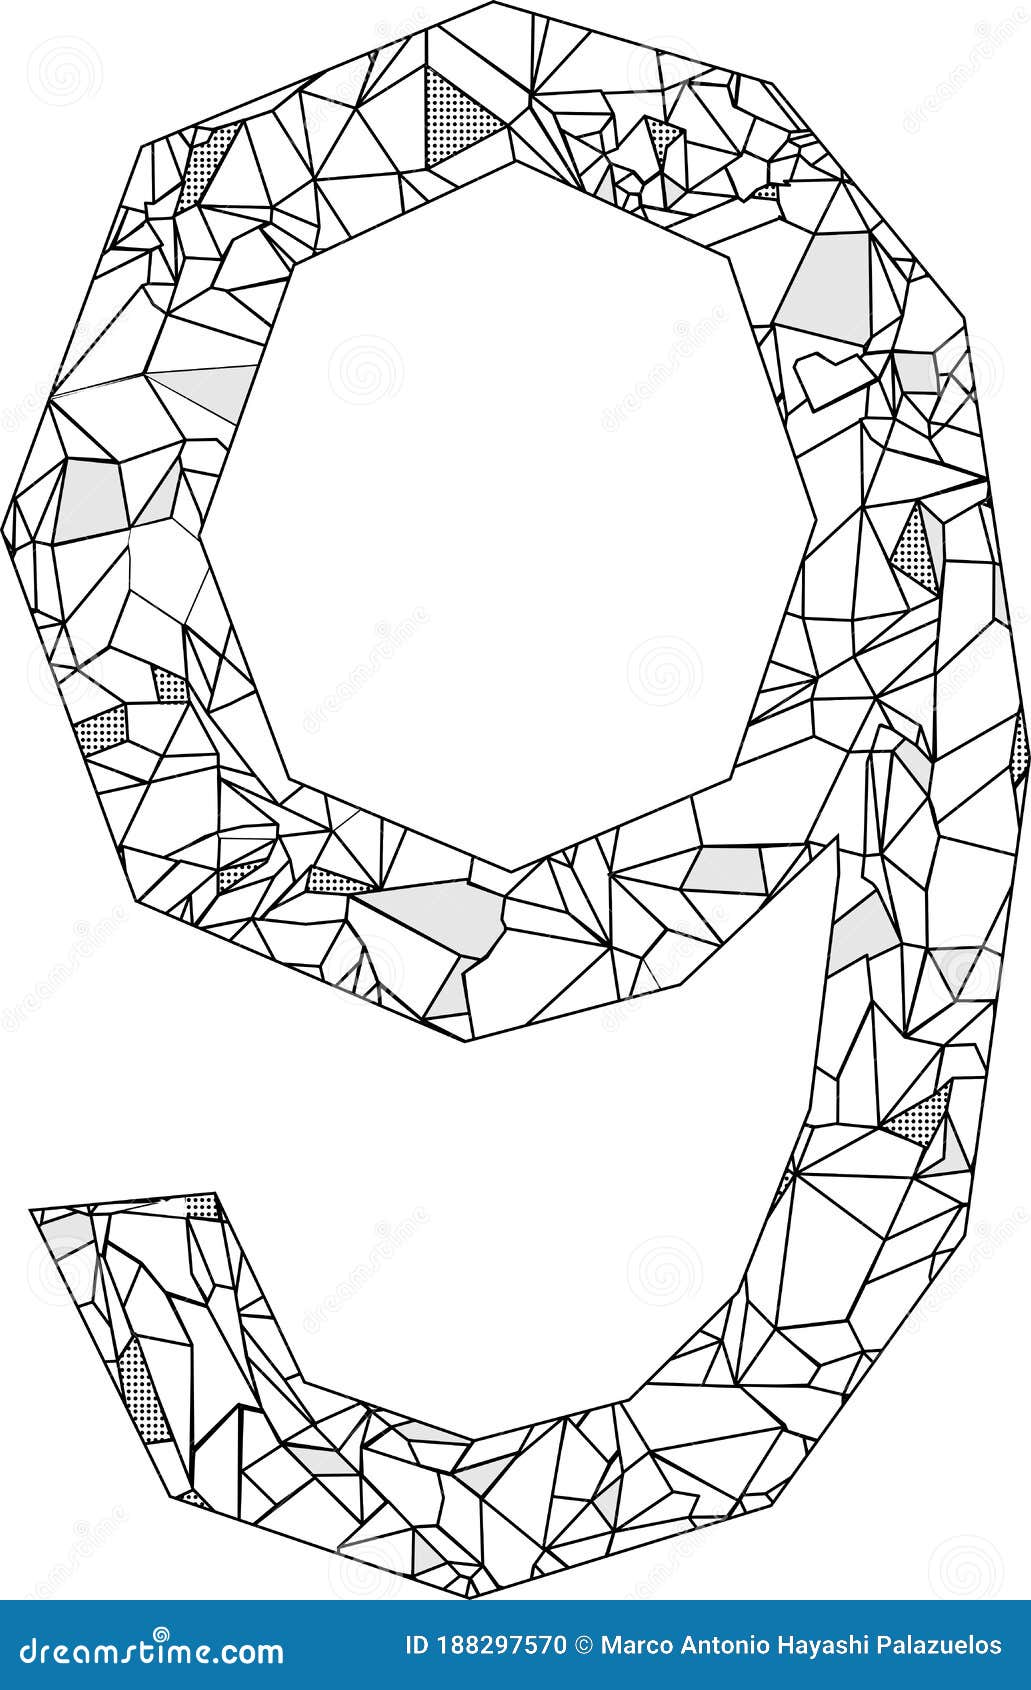 Download Isolated Polygonal Nine Number Illustration Mandala ...